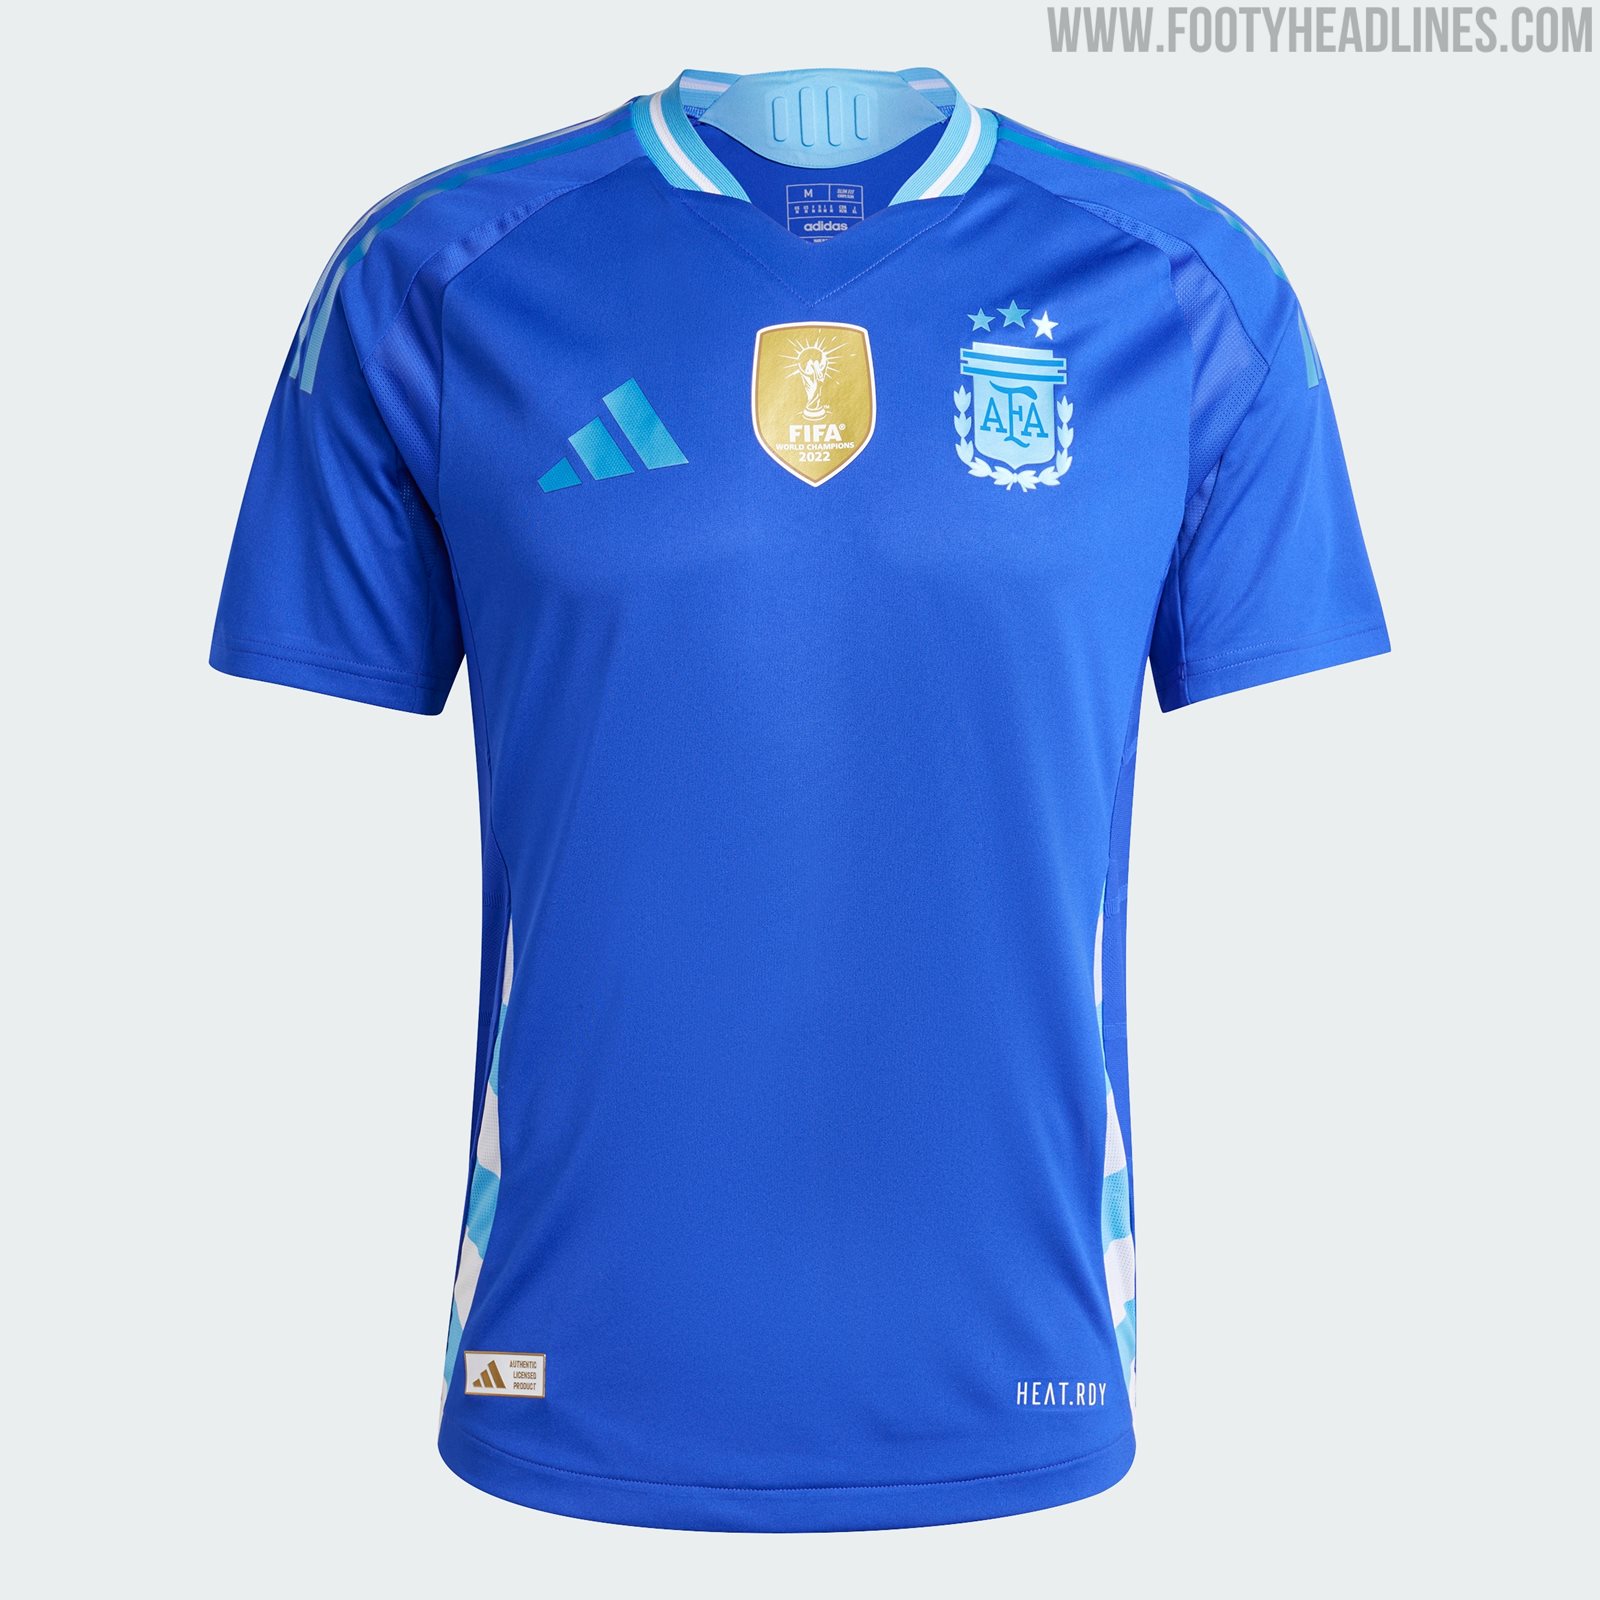 Argentina - Copa America away jersey